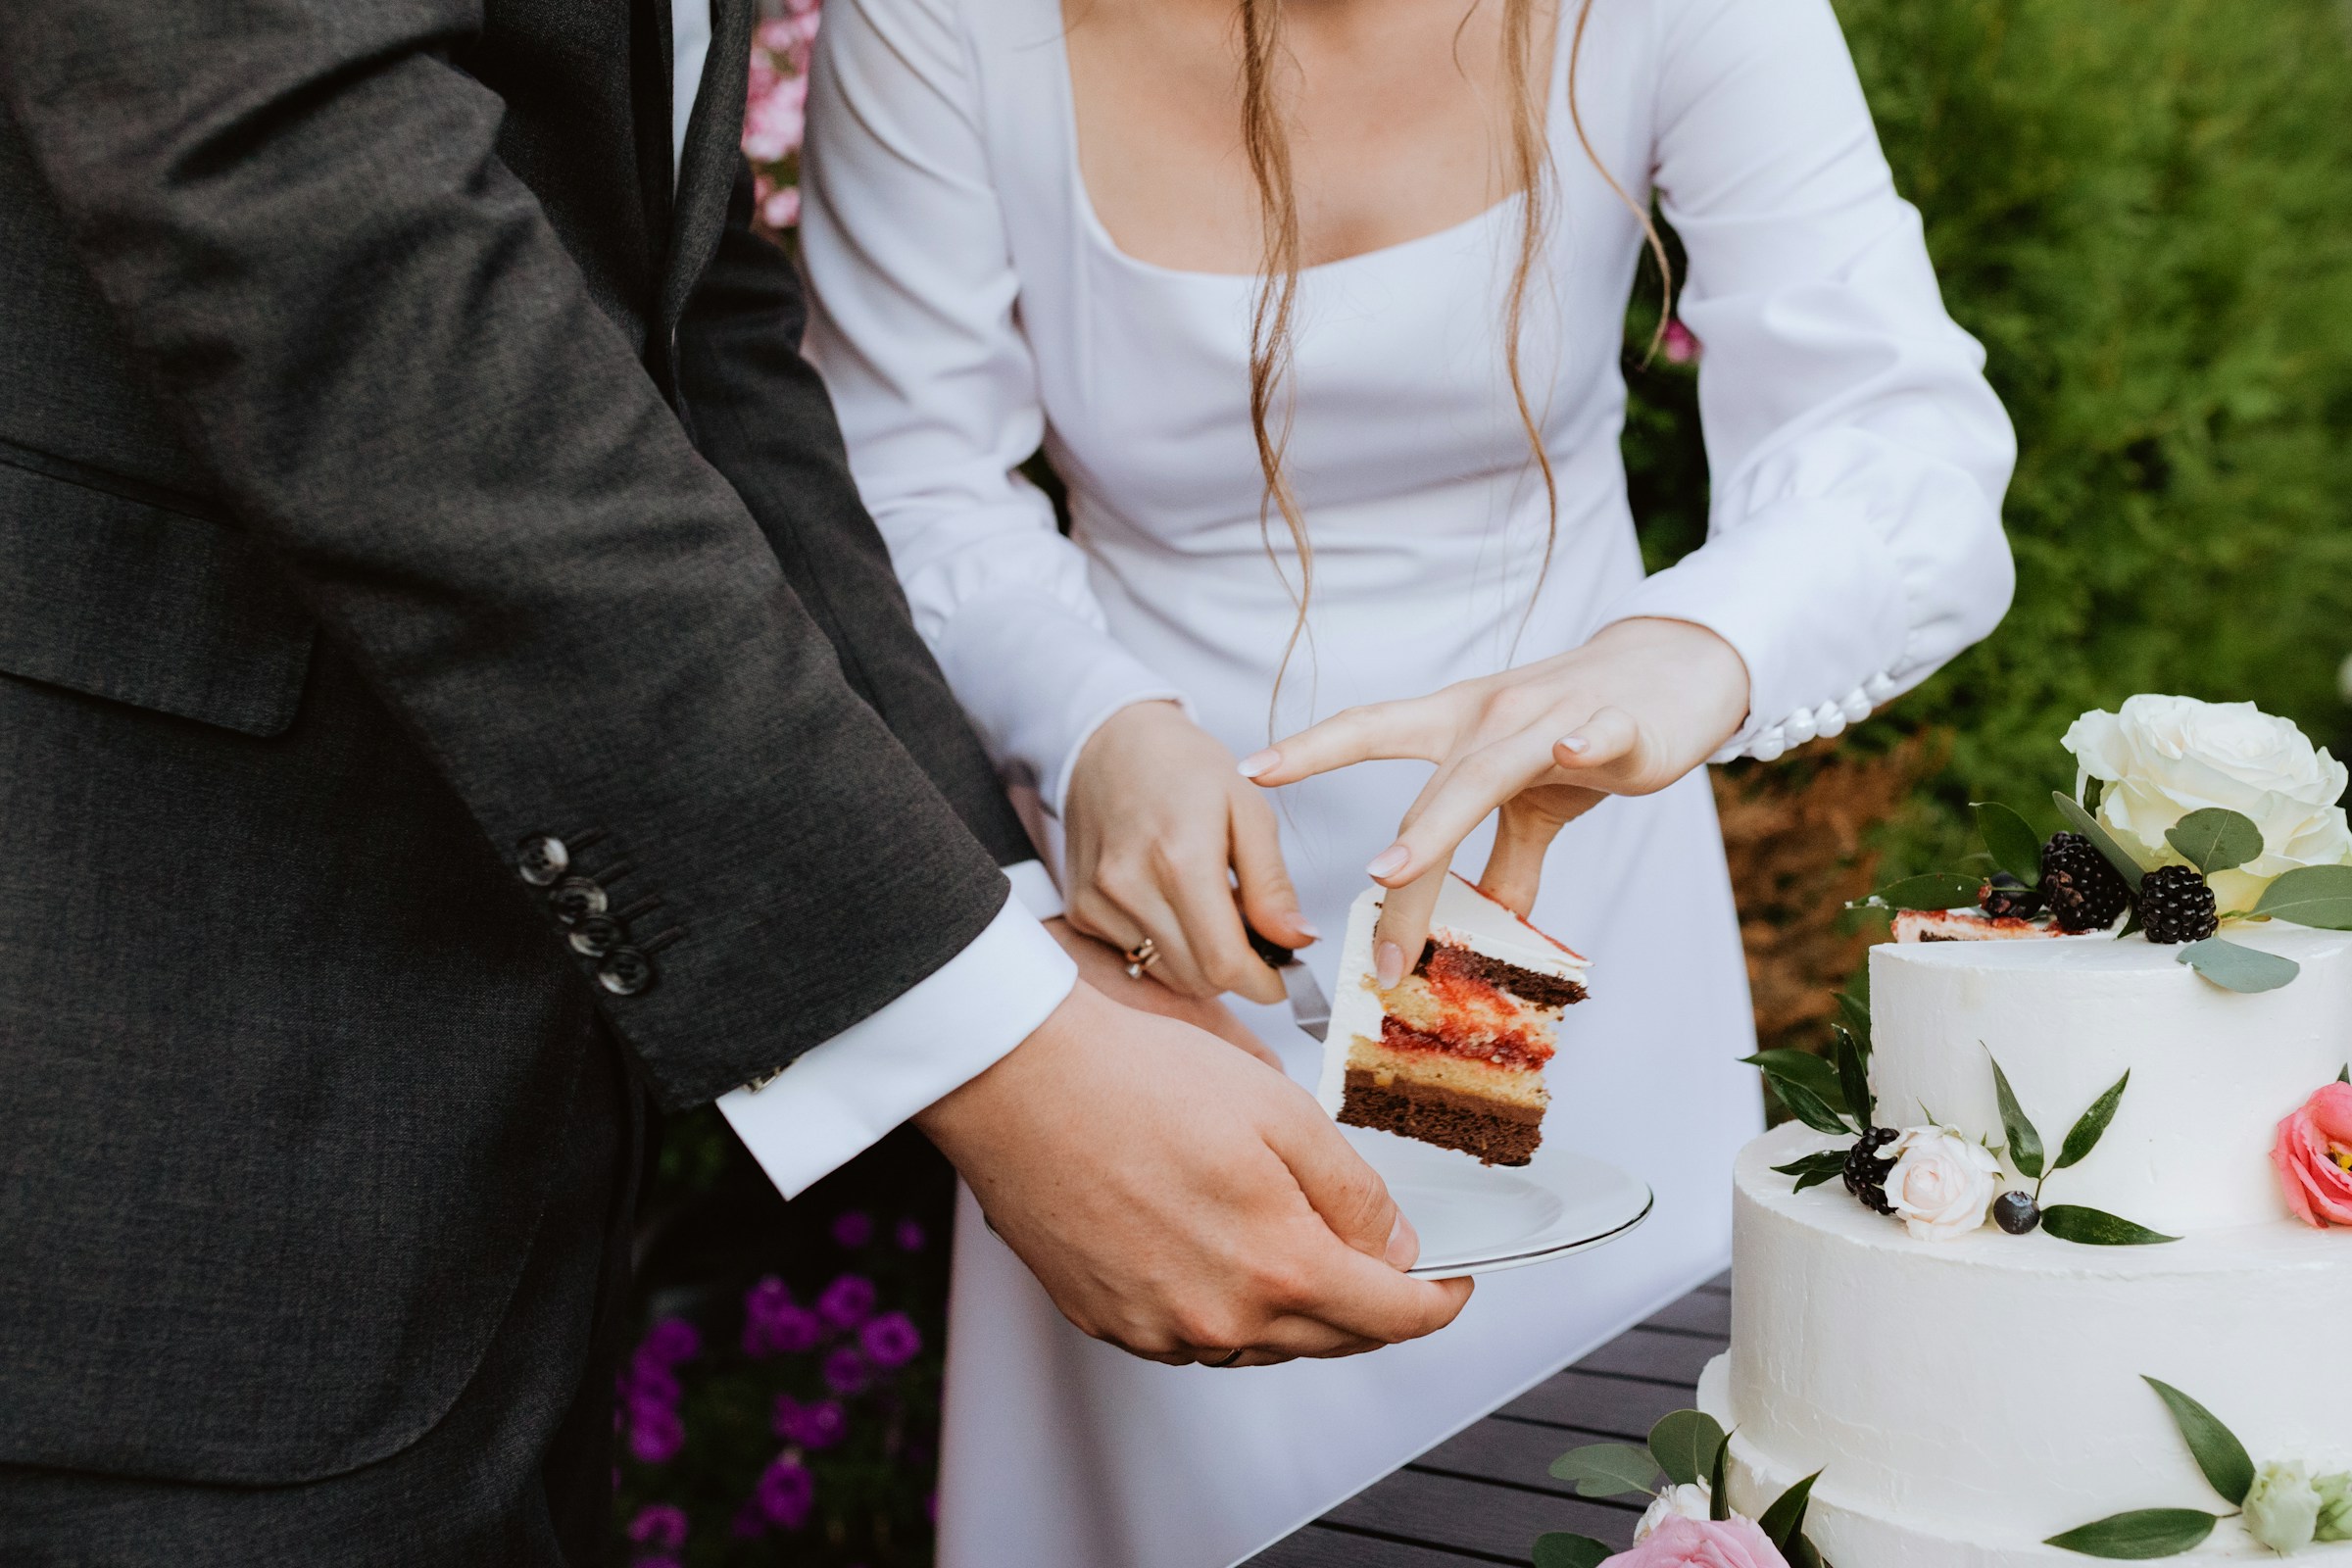 A couple cutting their wedding cake | Source: Unsplash